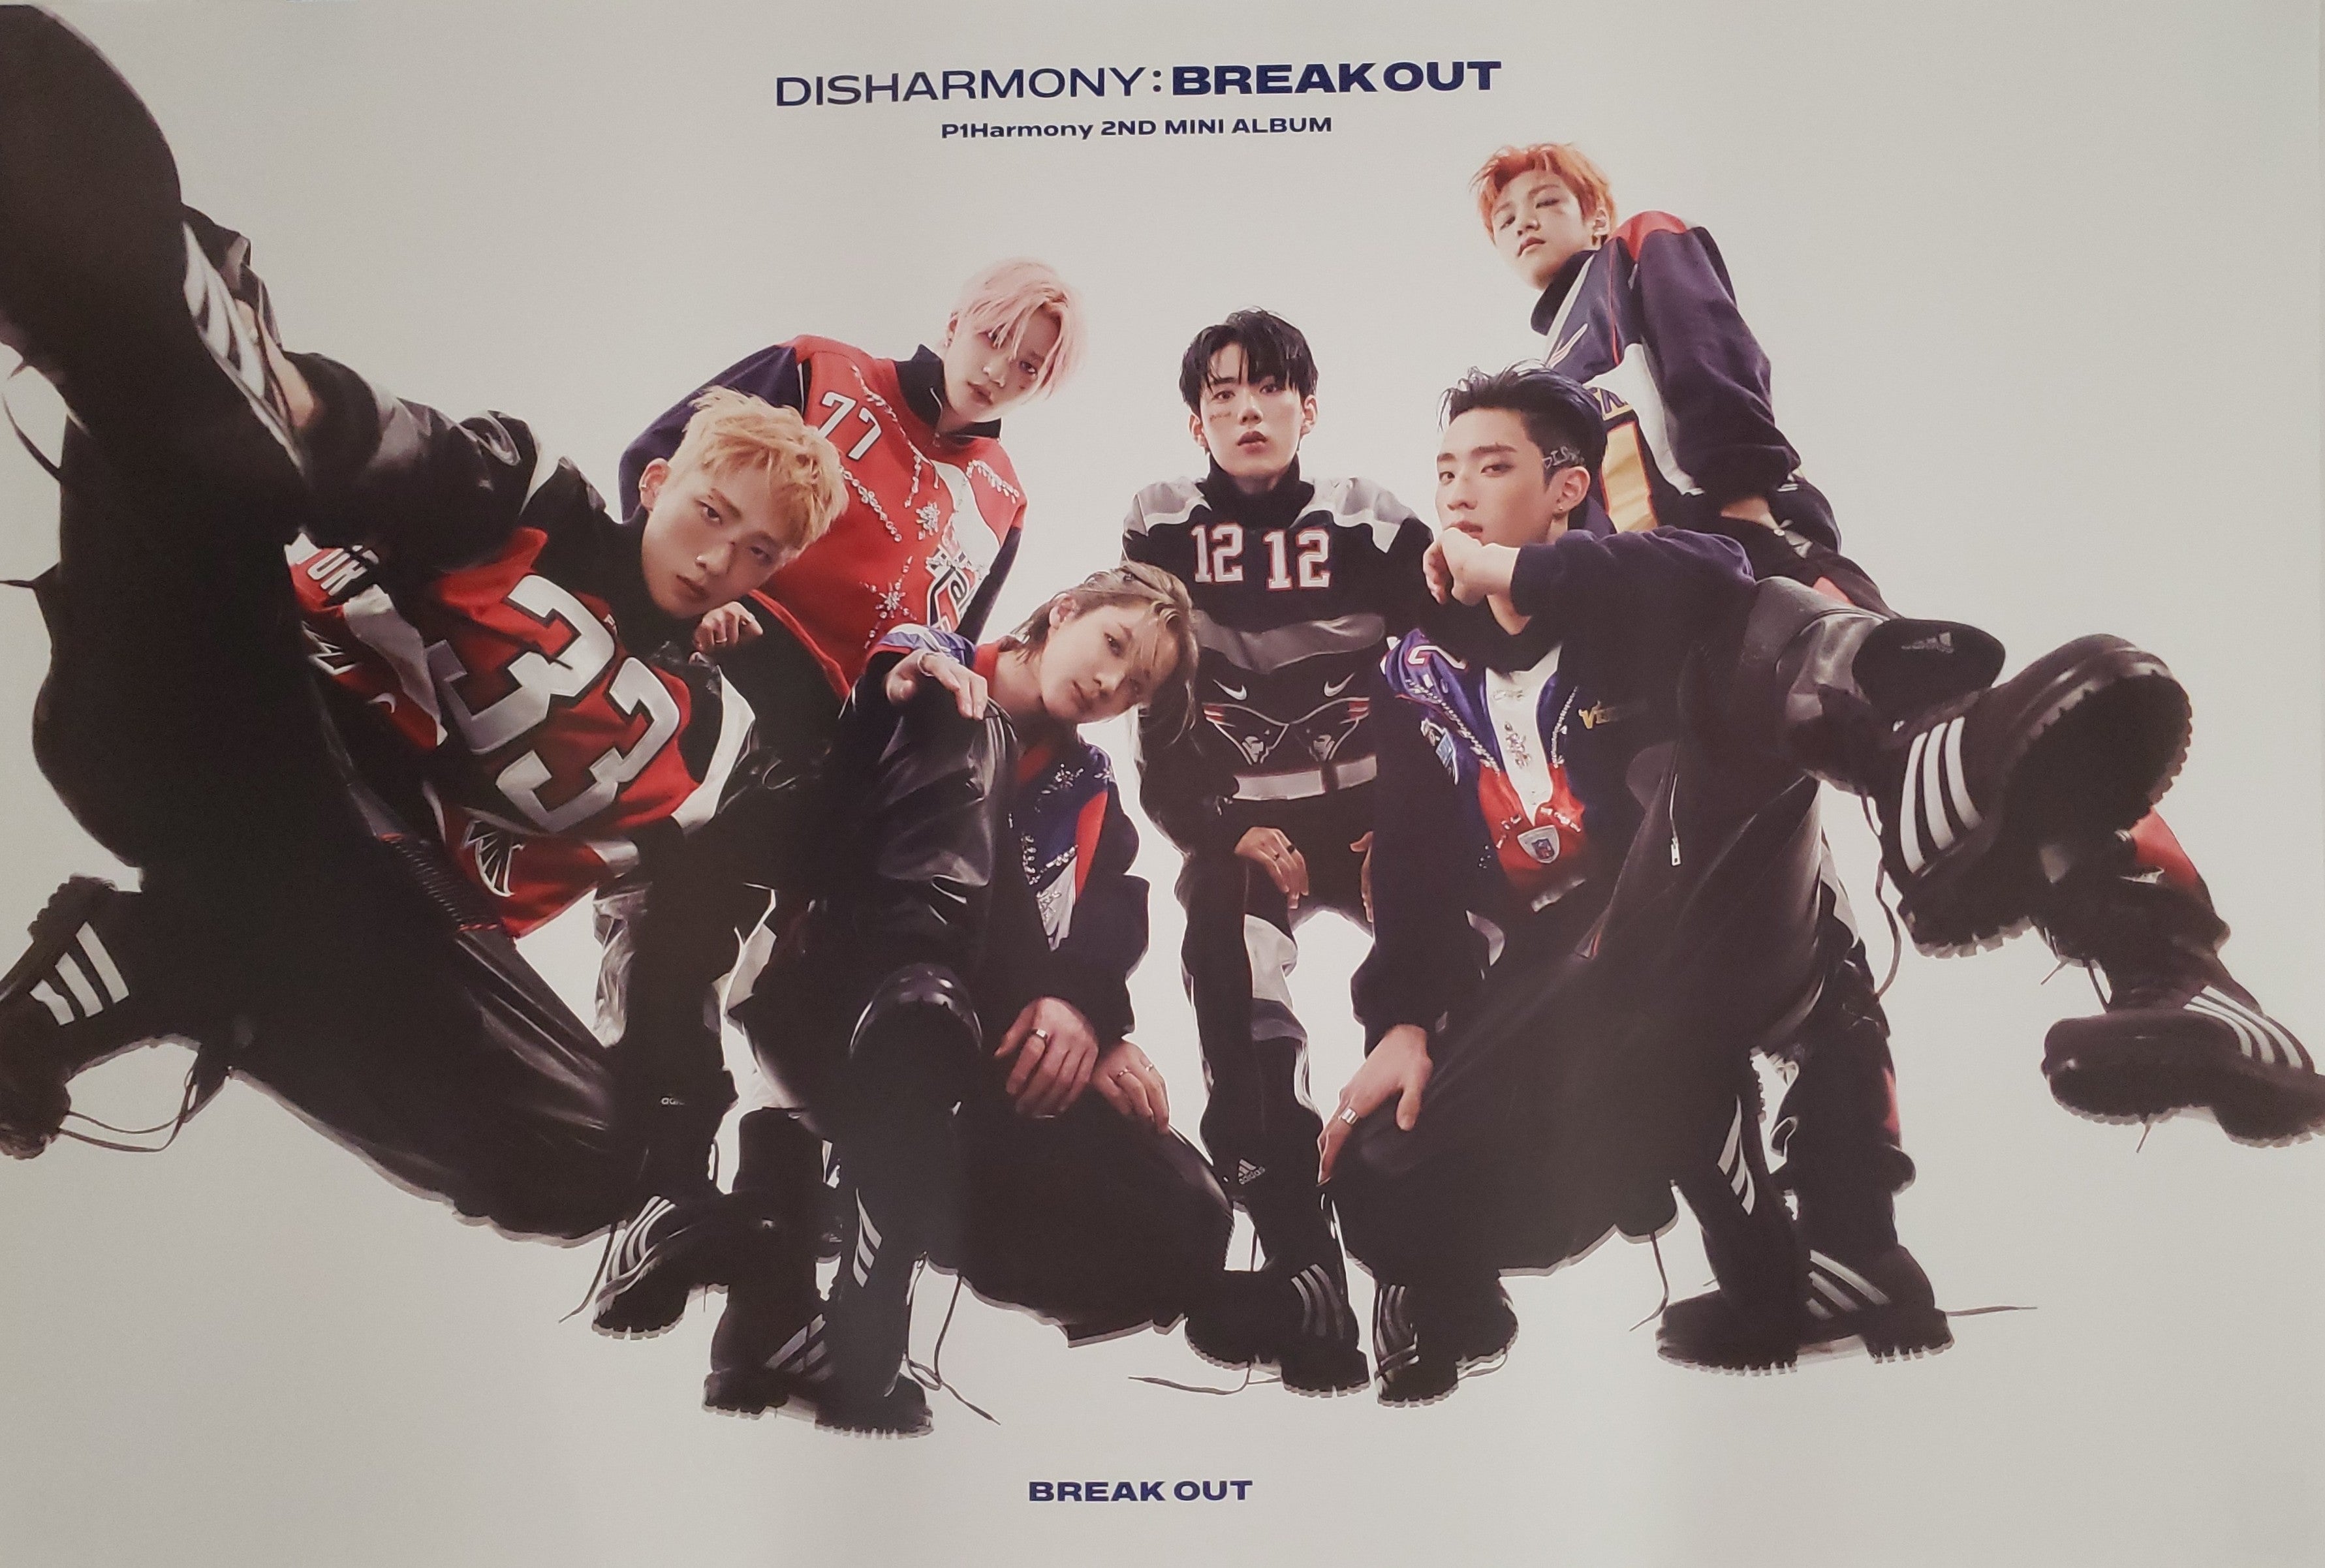 P1harmony - Disharmony : Break Out (2nd Mini Album)